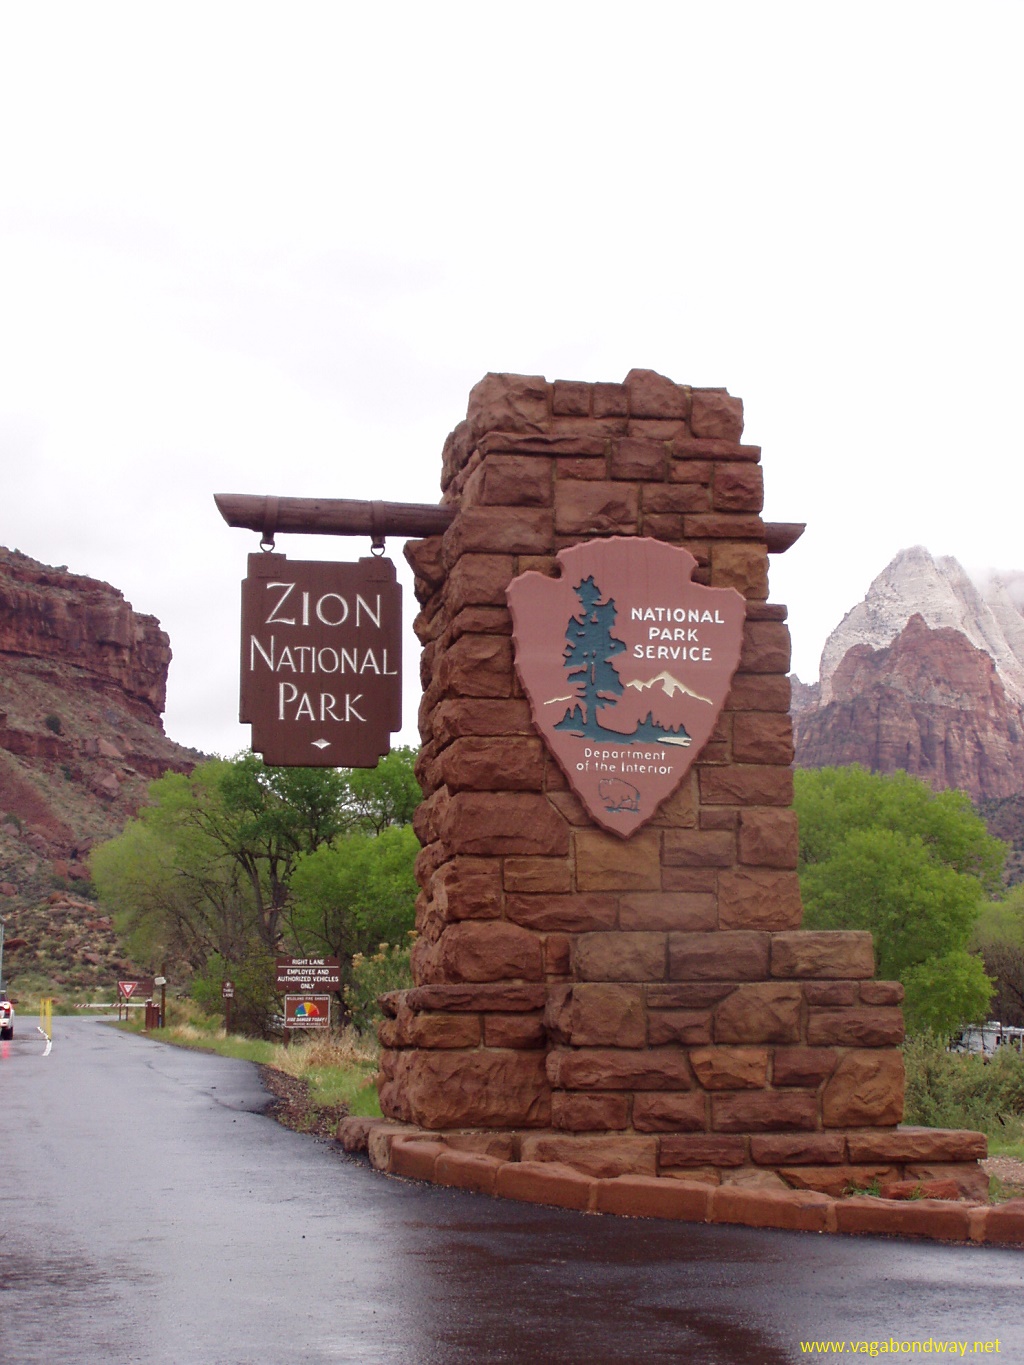 park entrance sign to Zion National Park